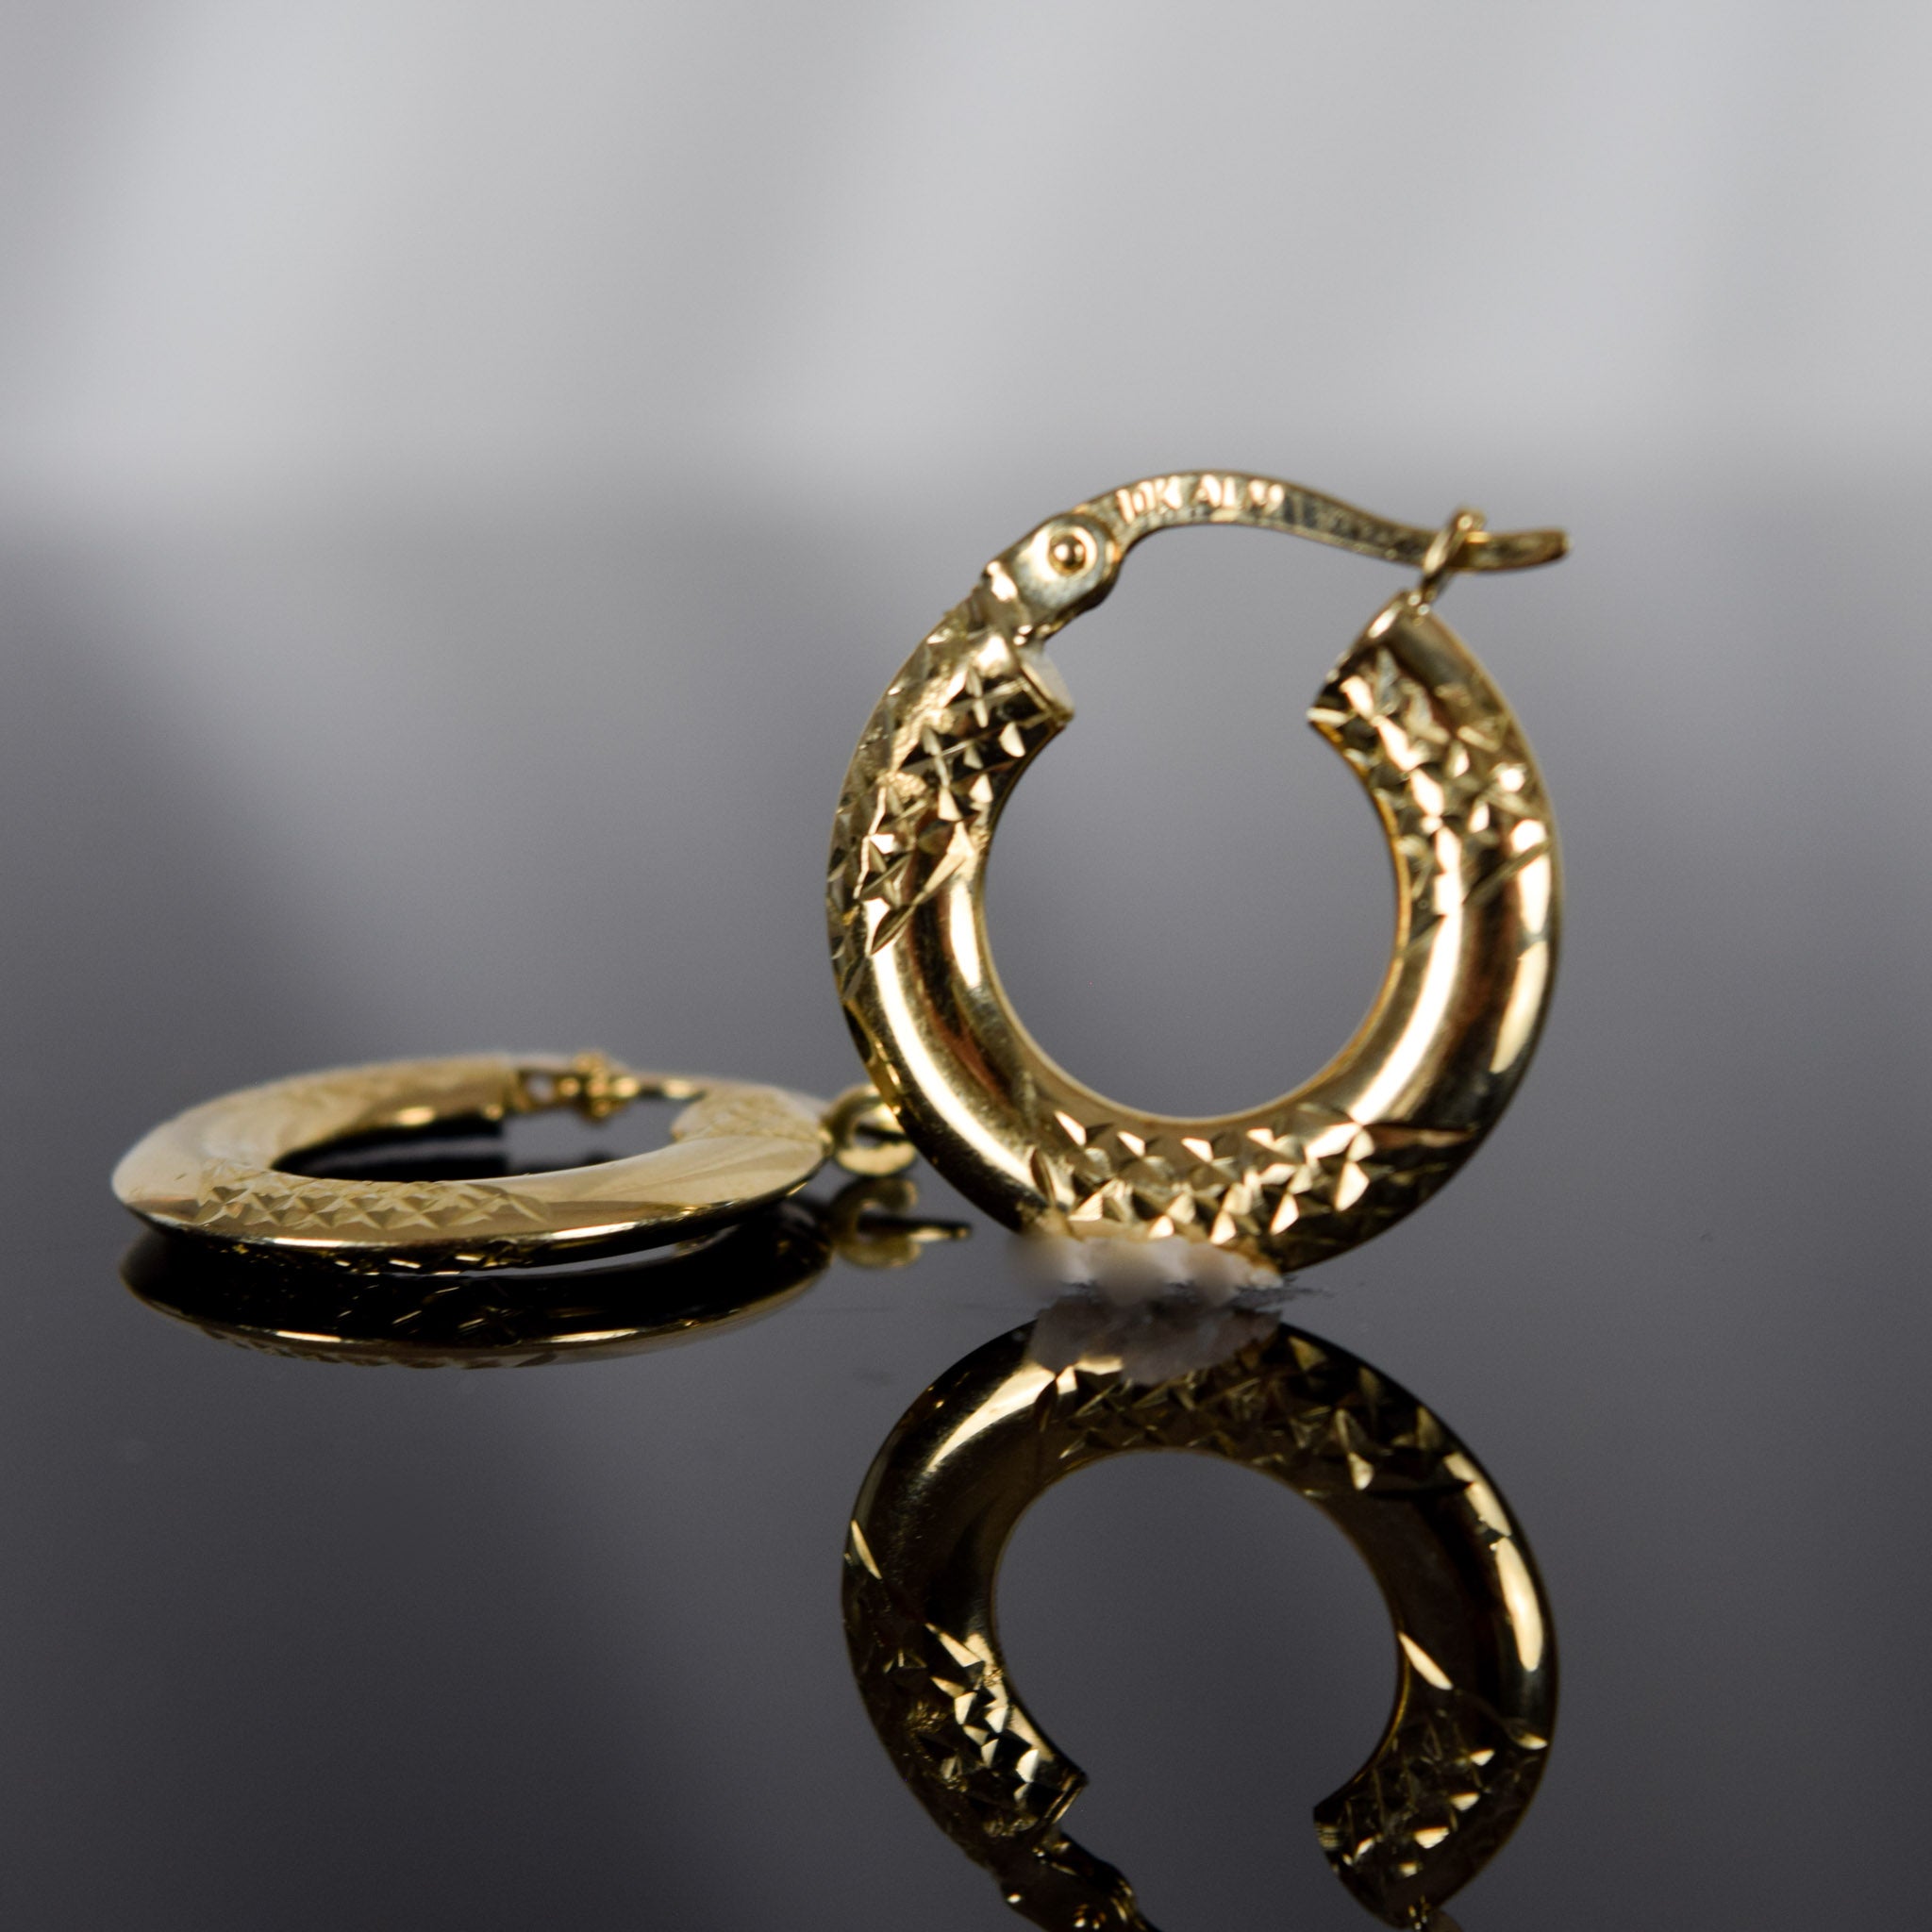 Vintage gold hoop earrings for sale, folklor